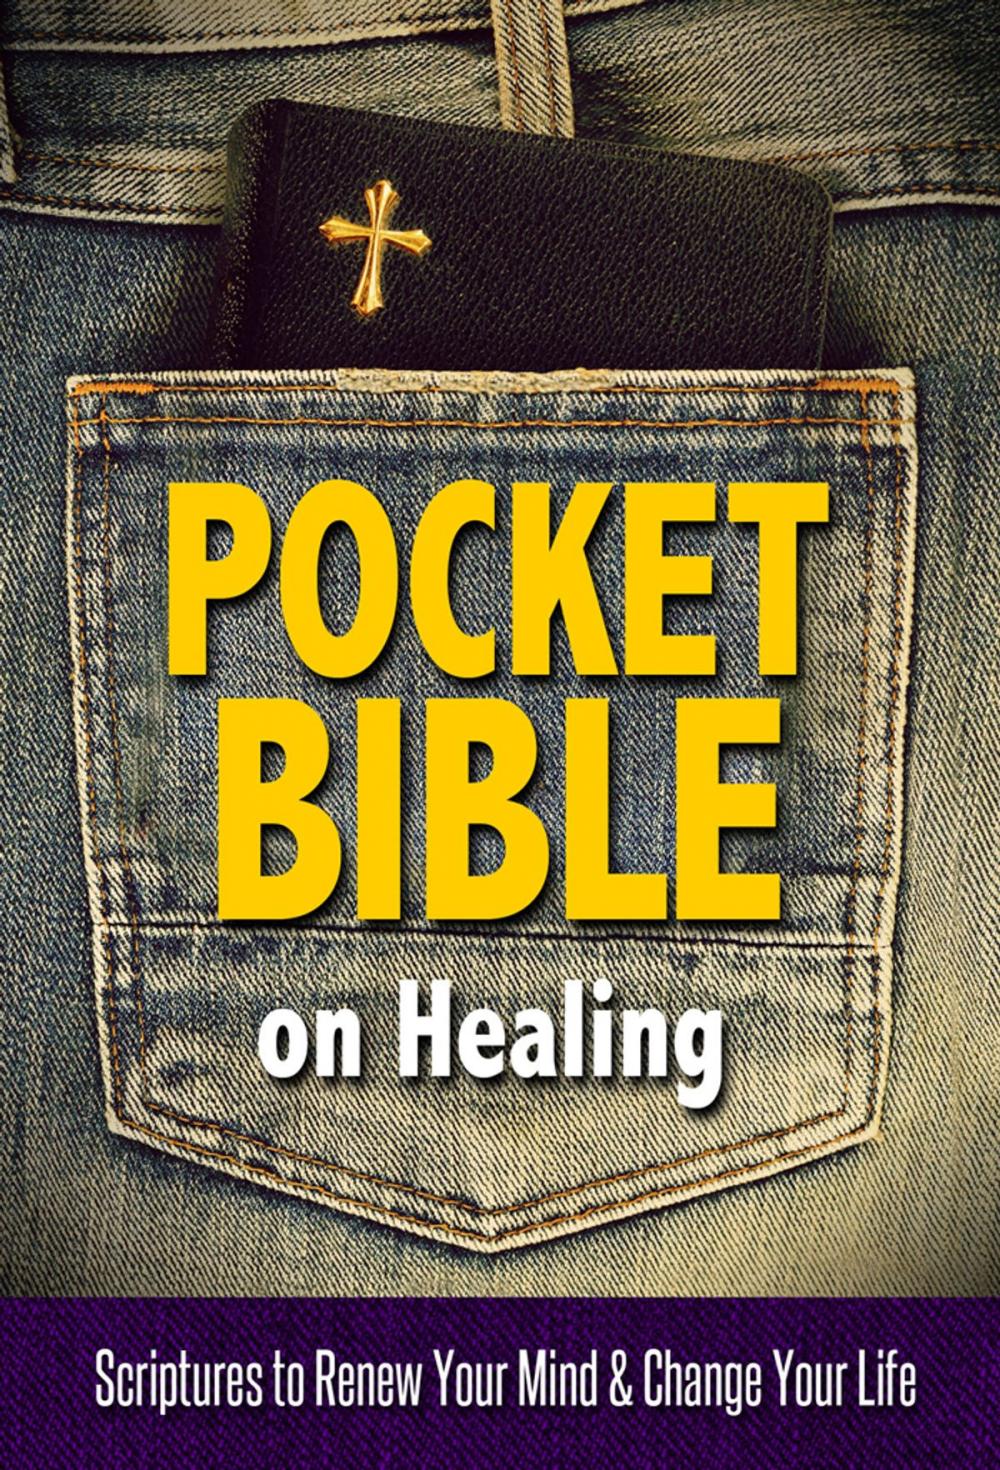 Big bigCover of Pocket Bible on Healing